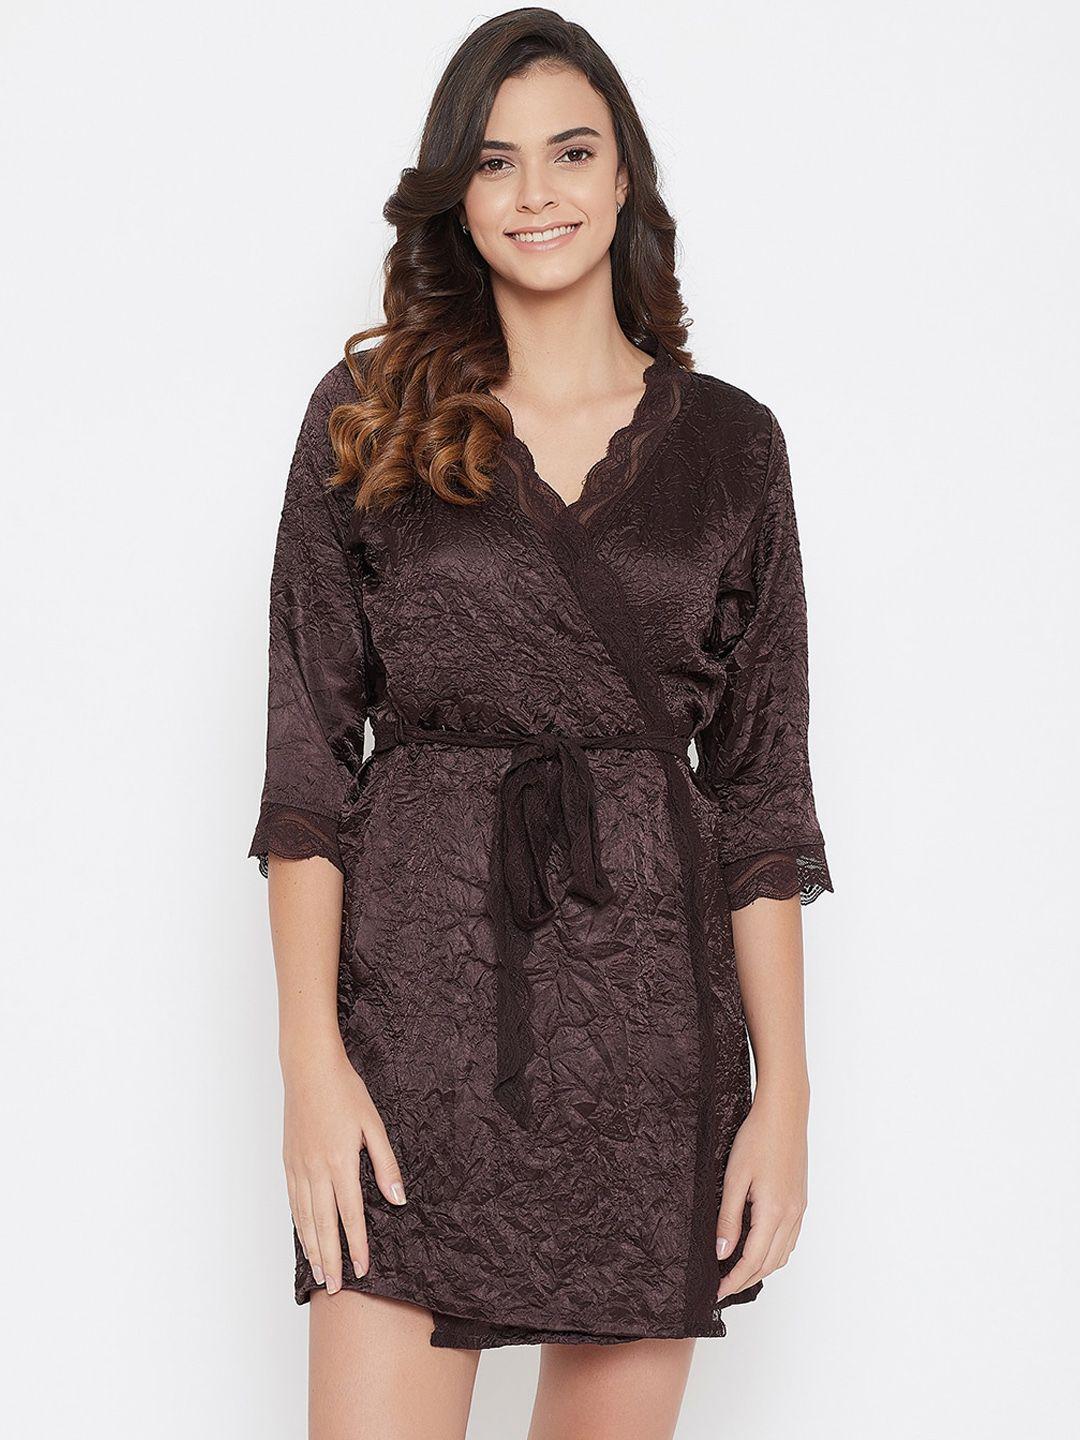 clovia-women-brown-self-patterned-satin-&-lace-robe